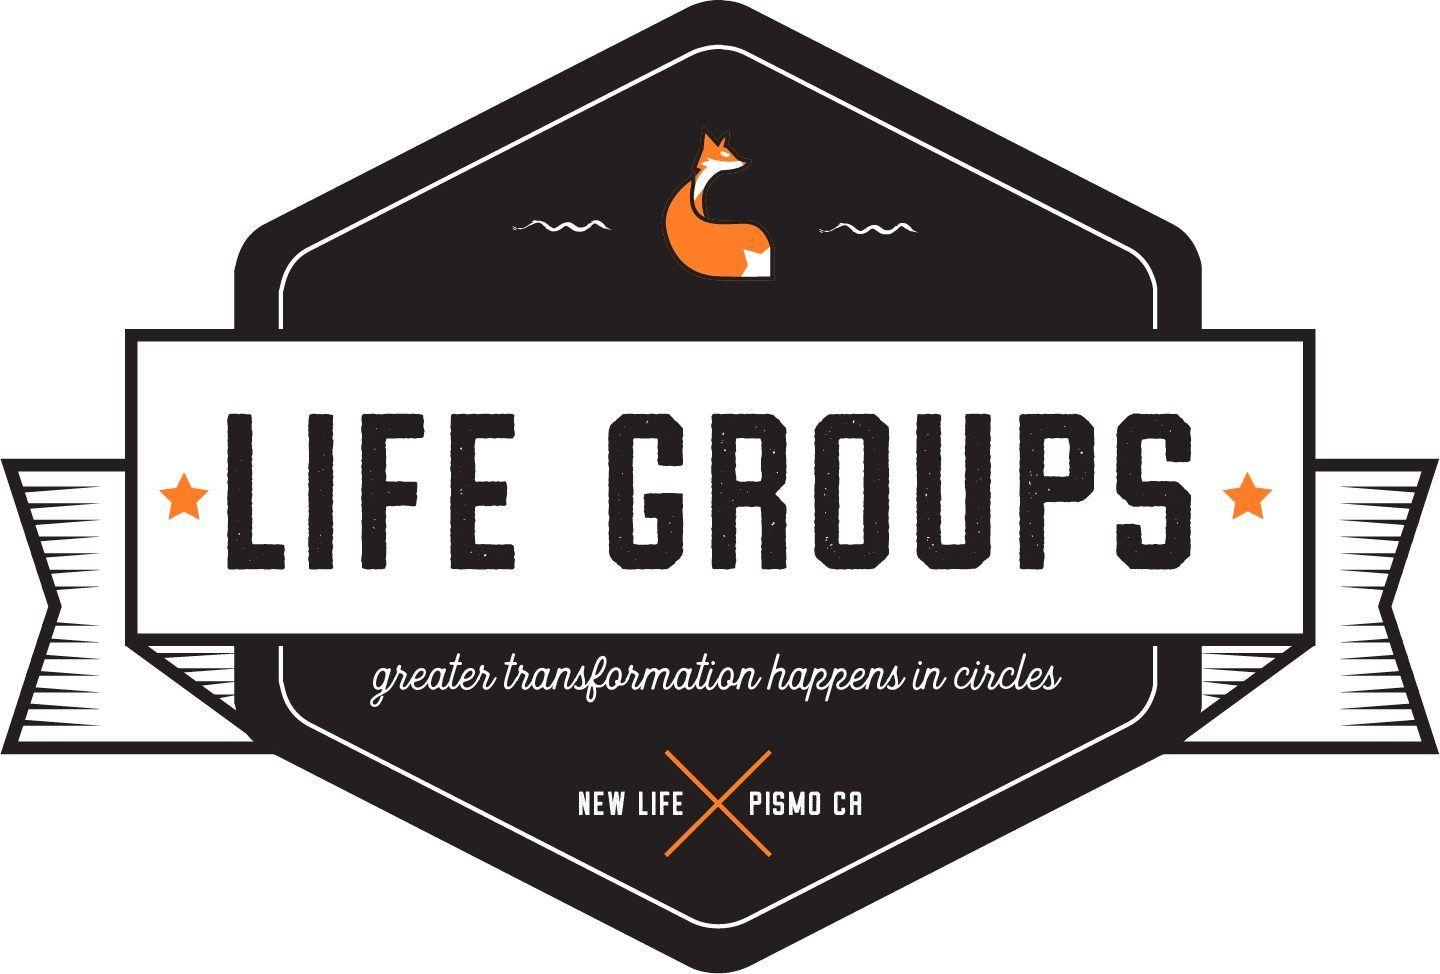 LifeGroups Logo - life groups logo E W L I F E